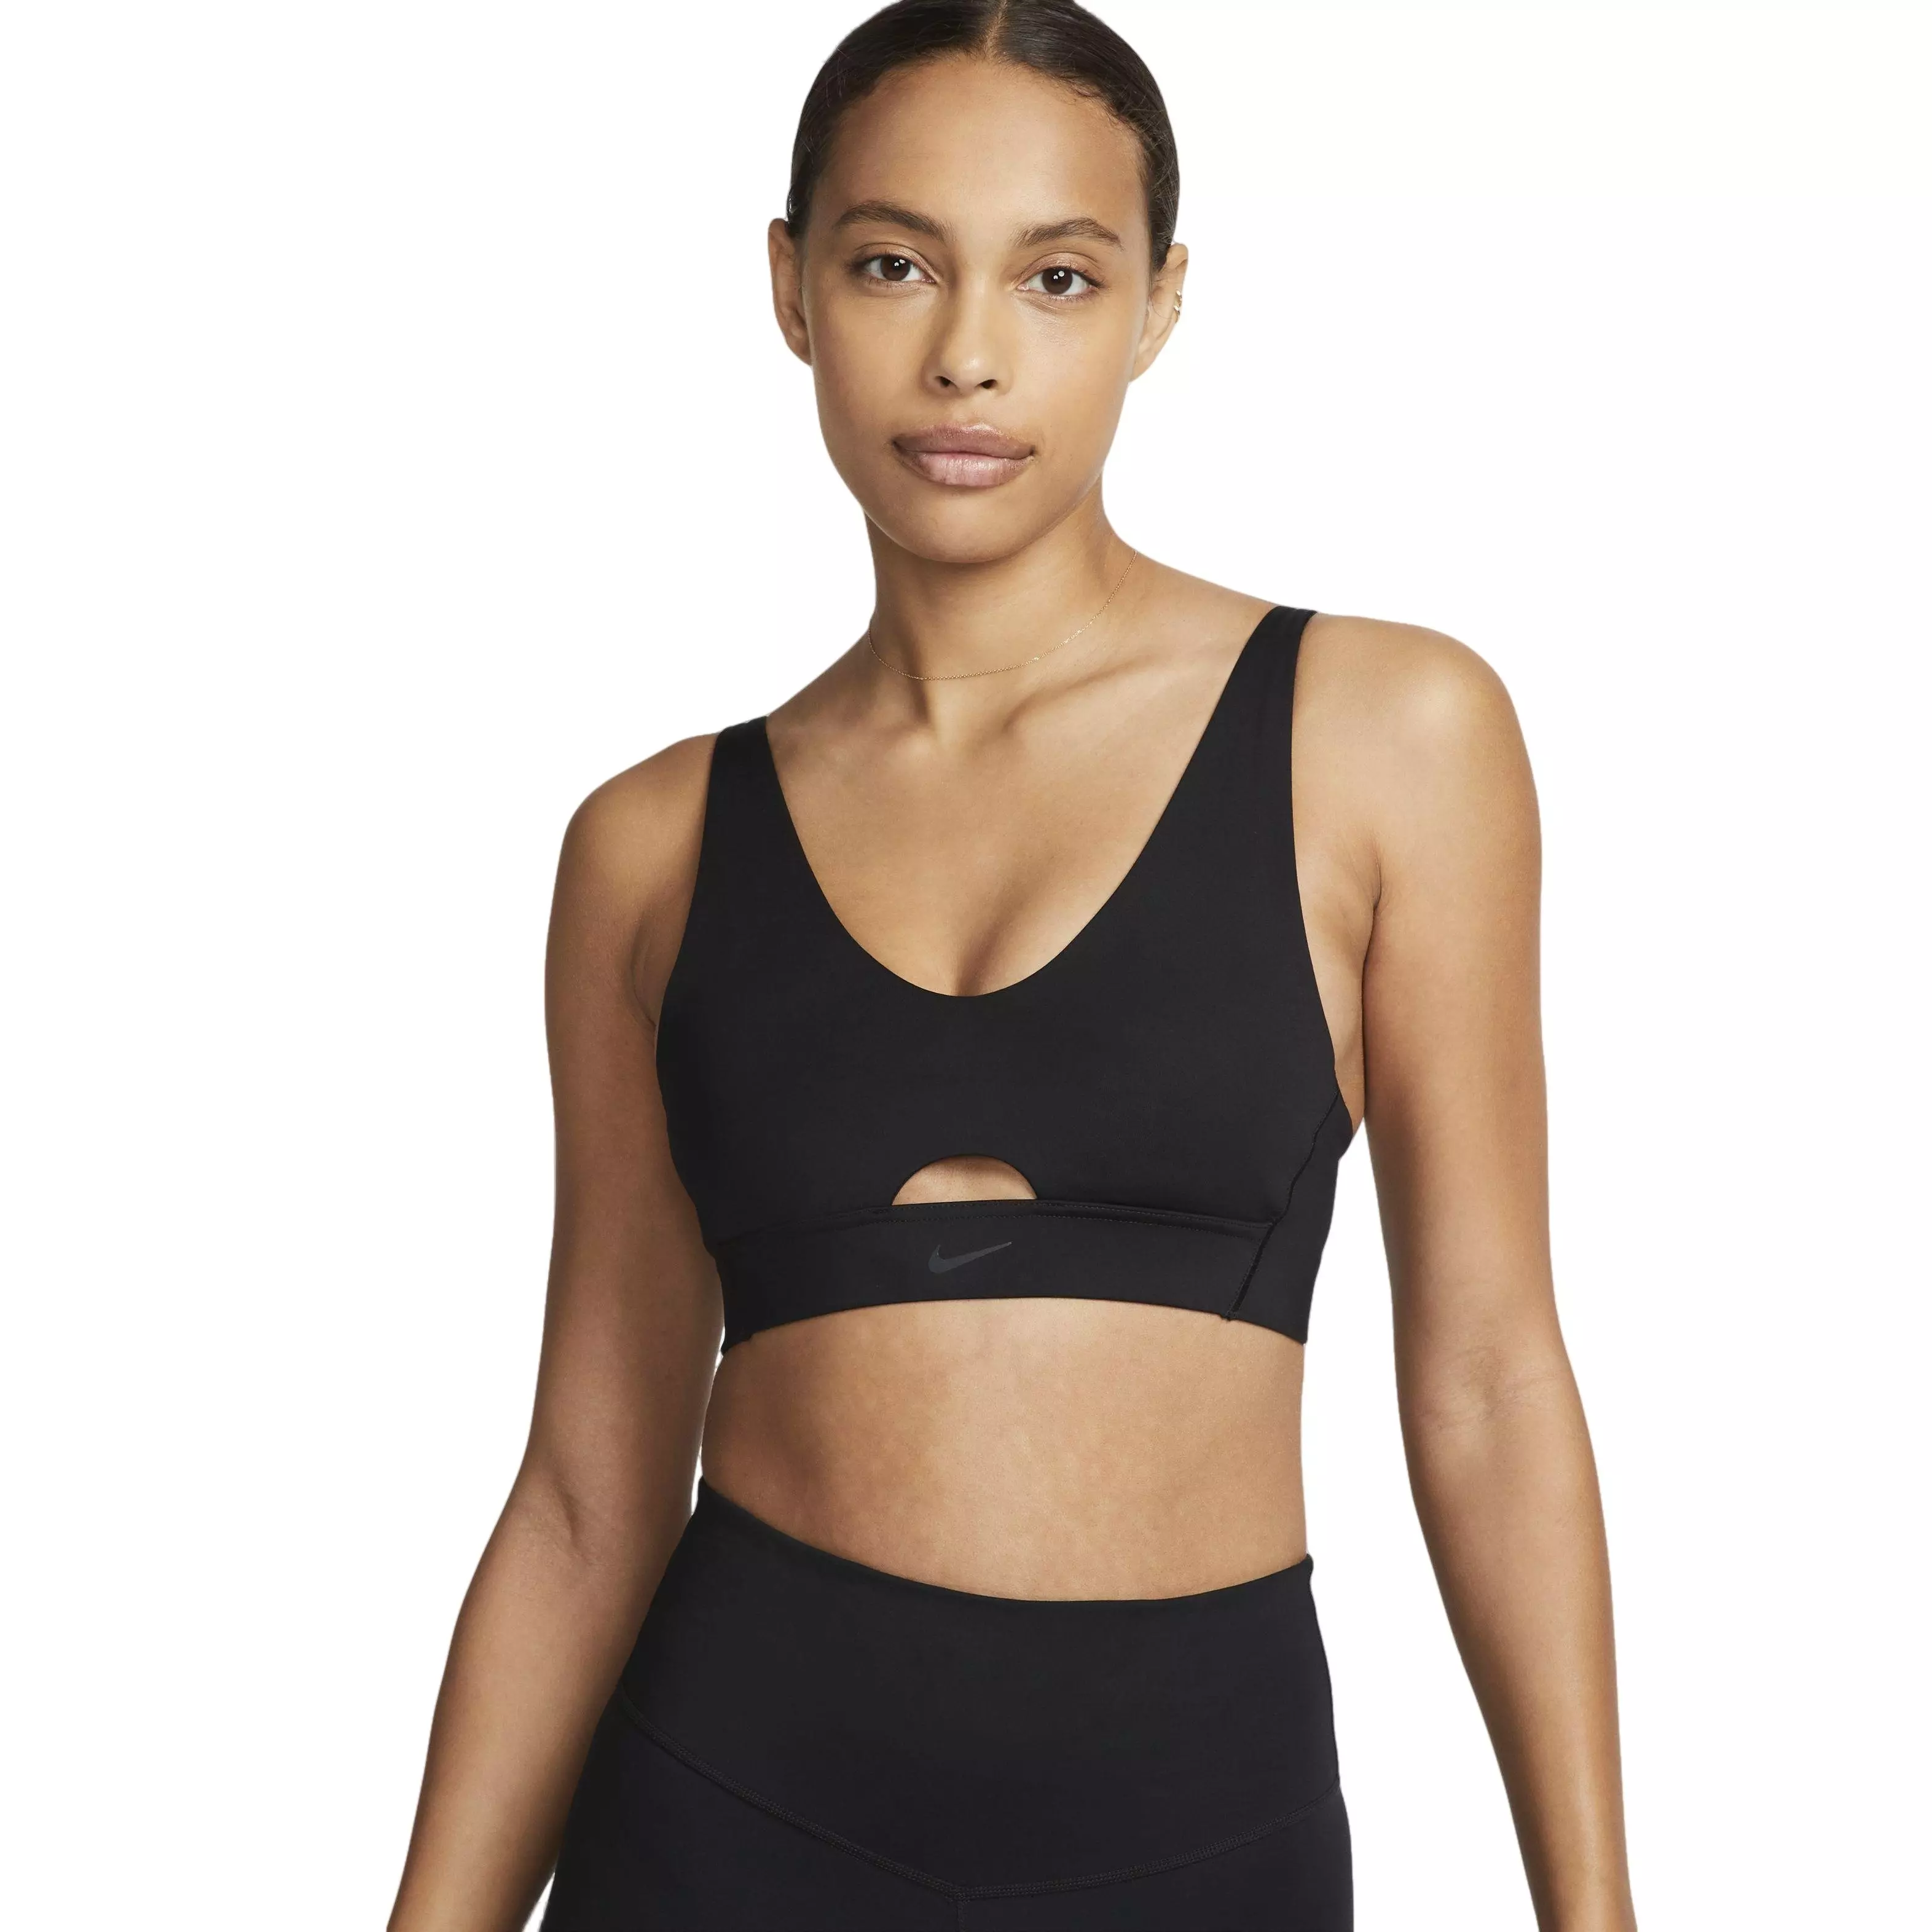 Nike Womens DriFit White Black Criss Cross Back Sports Bra Size Small